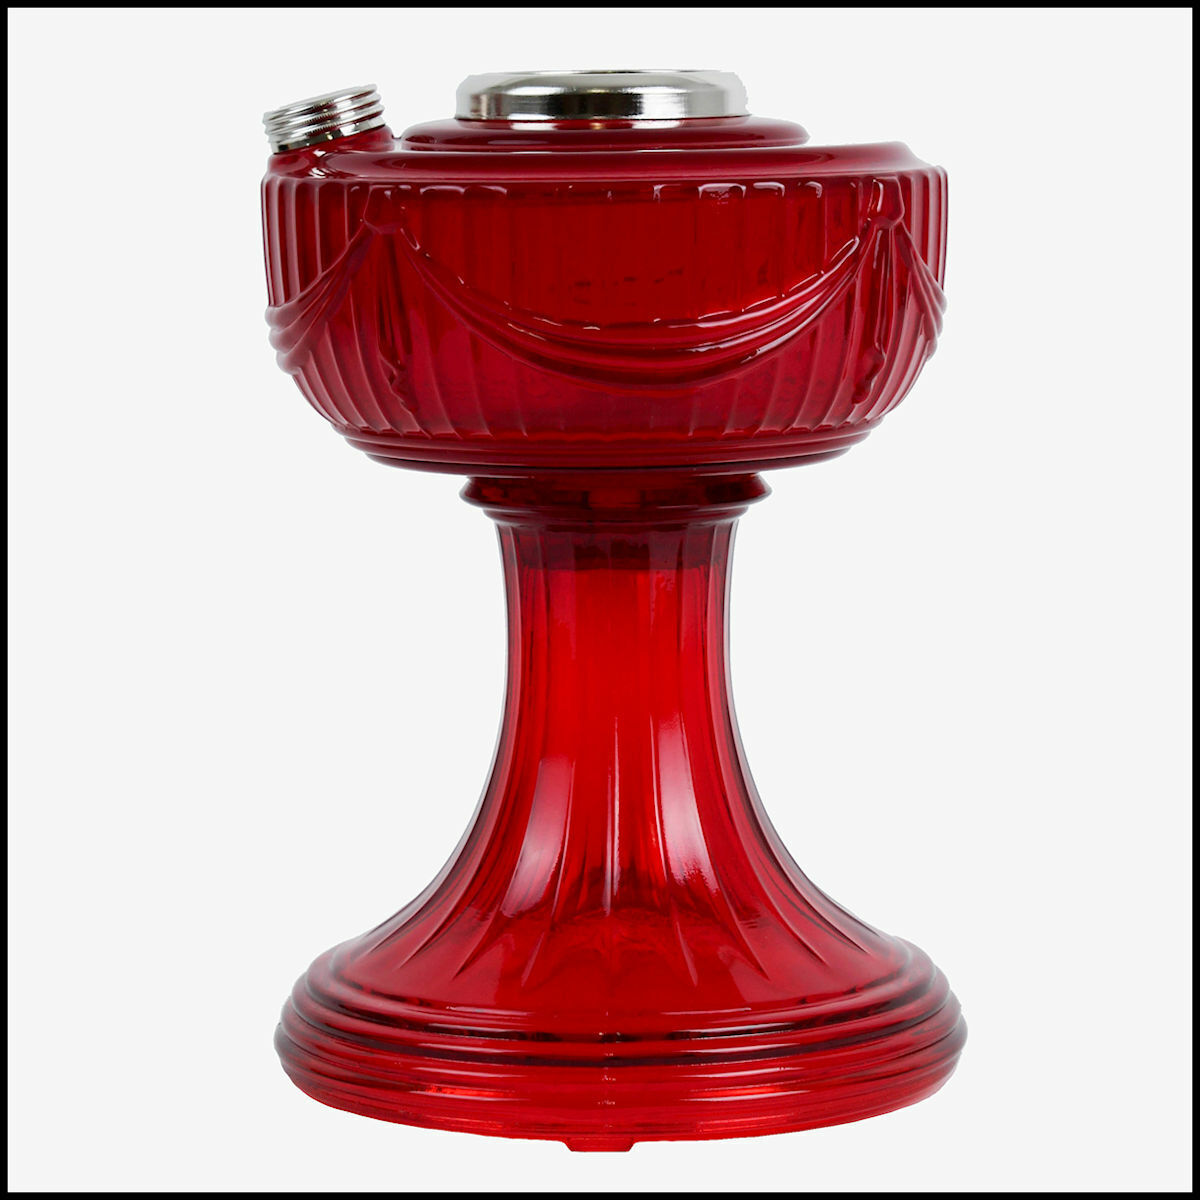 ALADDIN LAMP RUBY RED LINCOLN DRAPE FONT w NICKEL HARDWARE - NEW